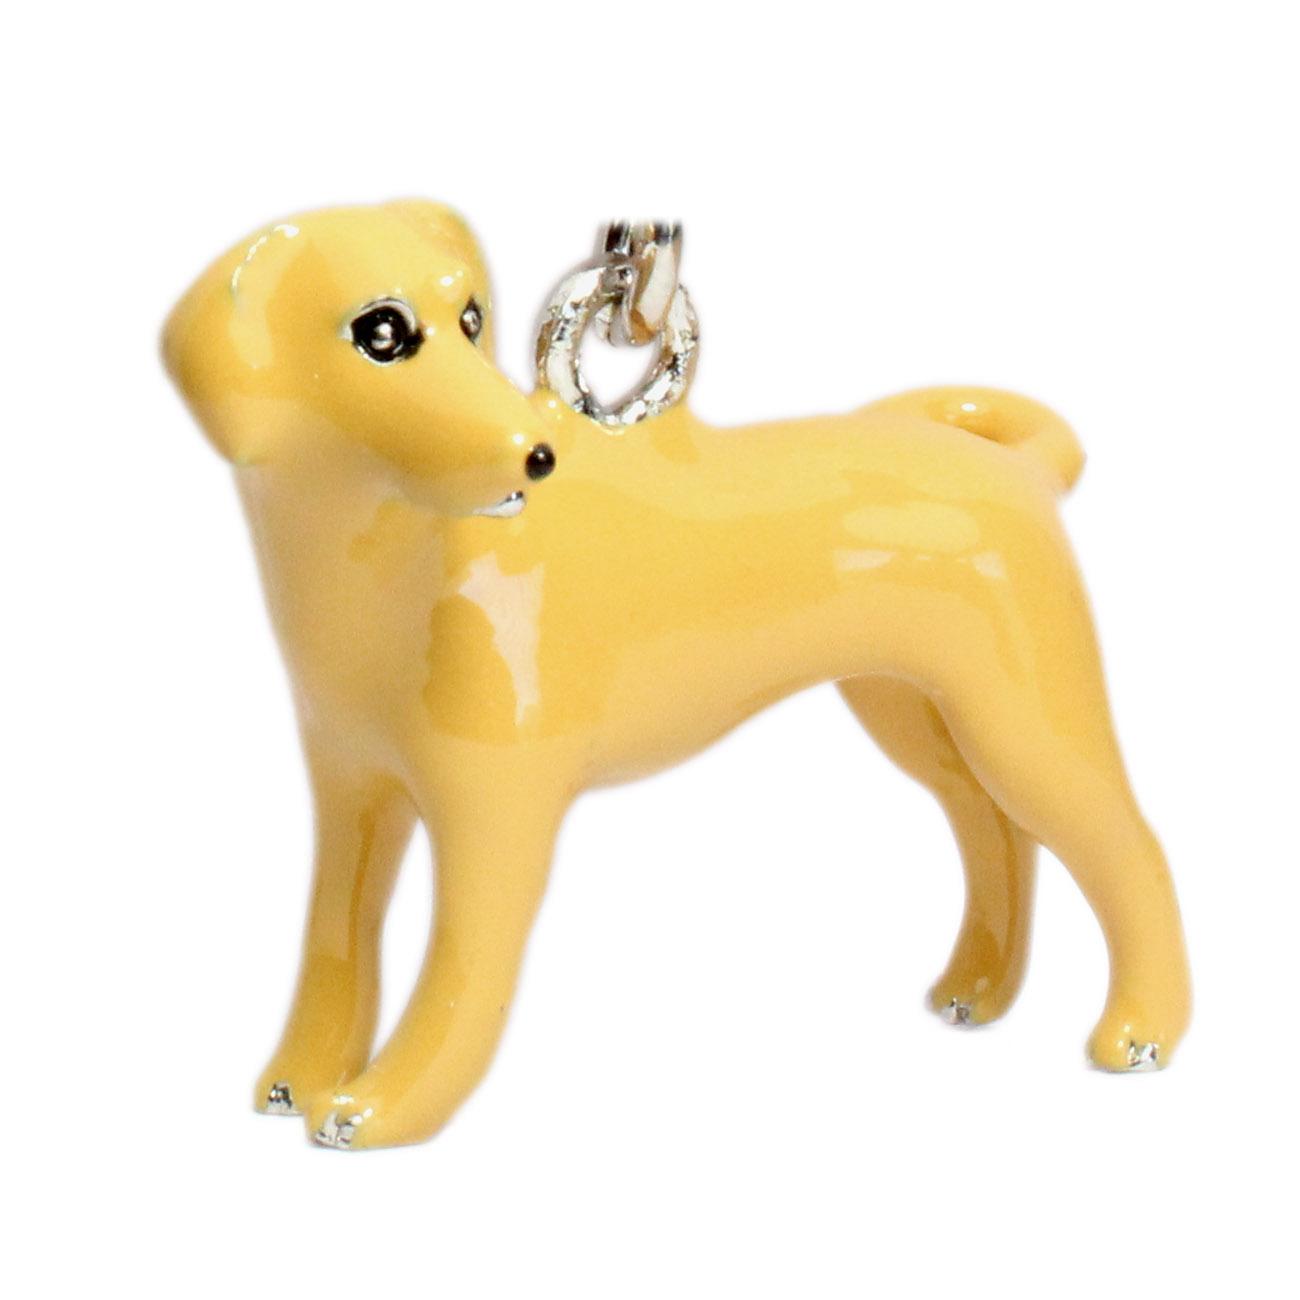 Labrador Retriever Key Chain by Parisian Pet - Yellow Lab